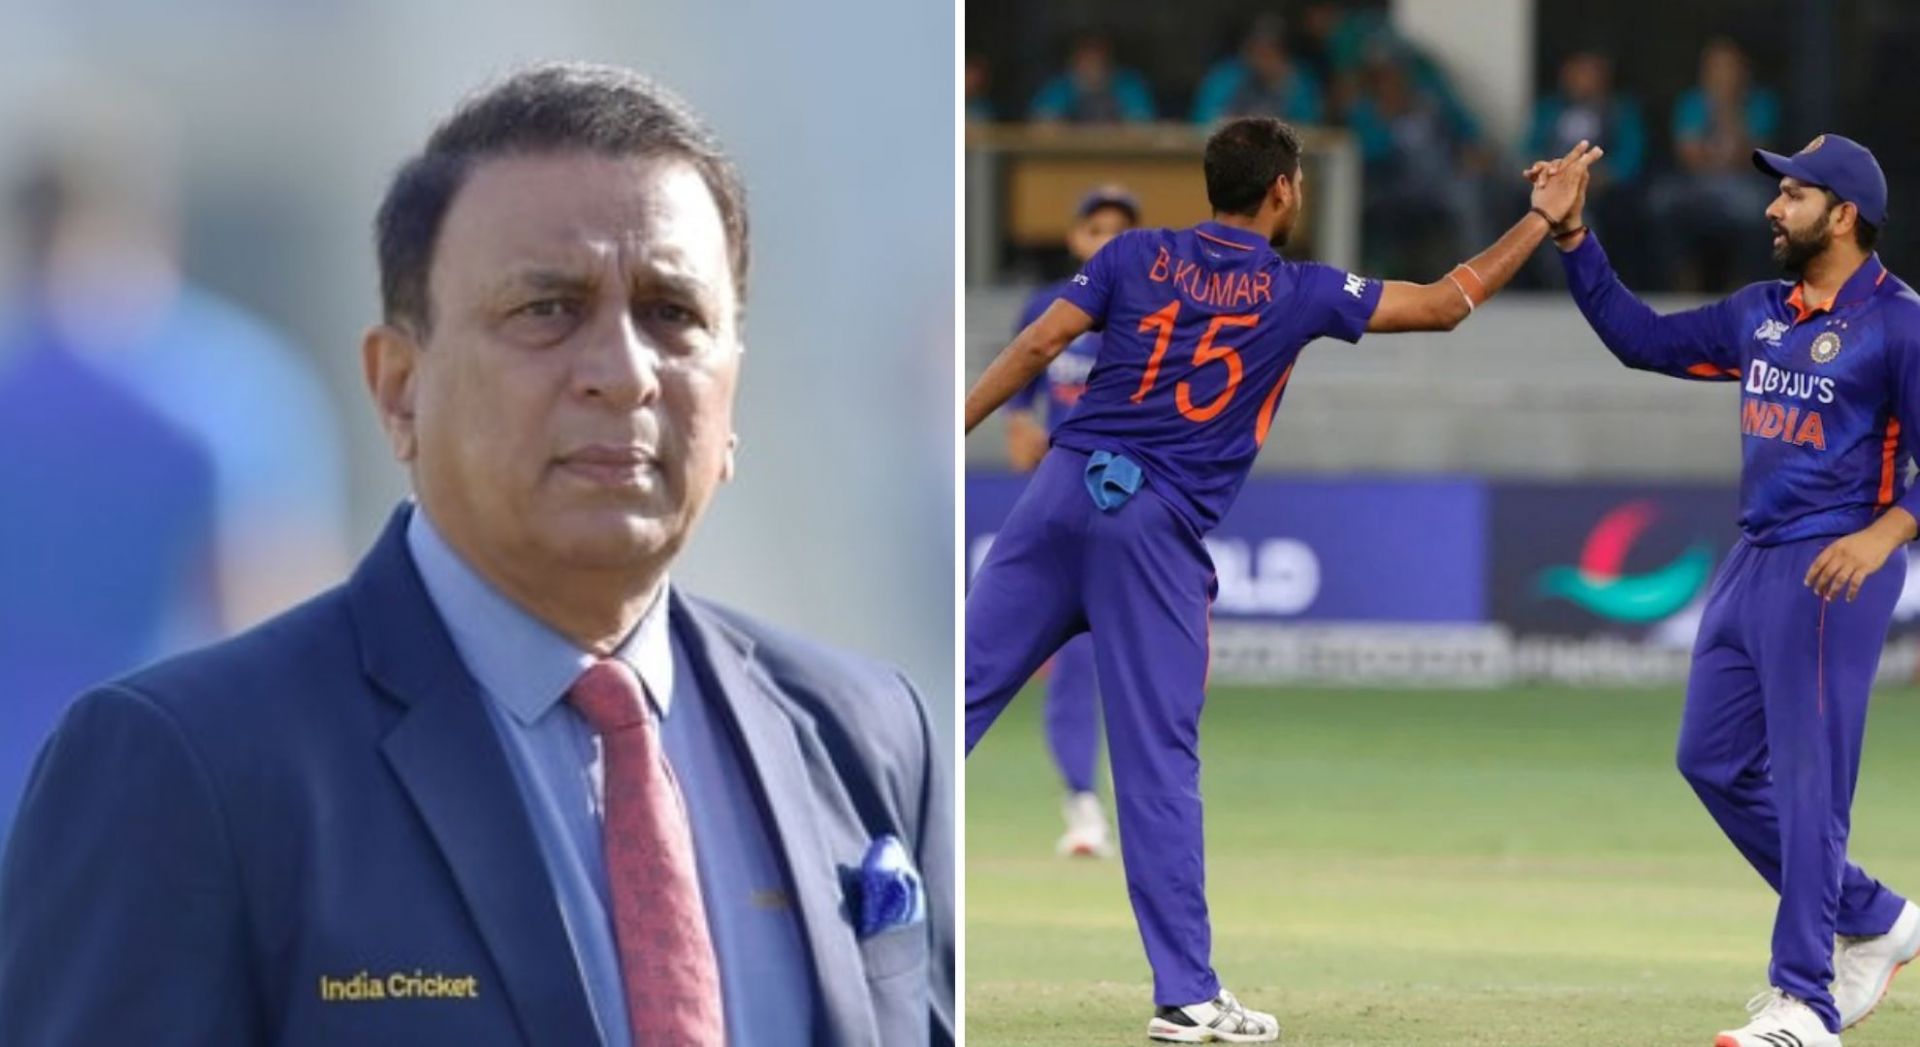 Sunil Gavaskar analyzes India bowling against Pakistan on Sunday.